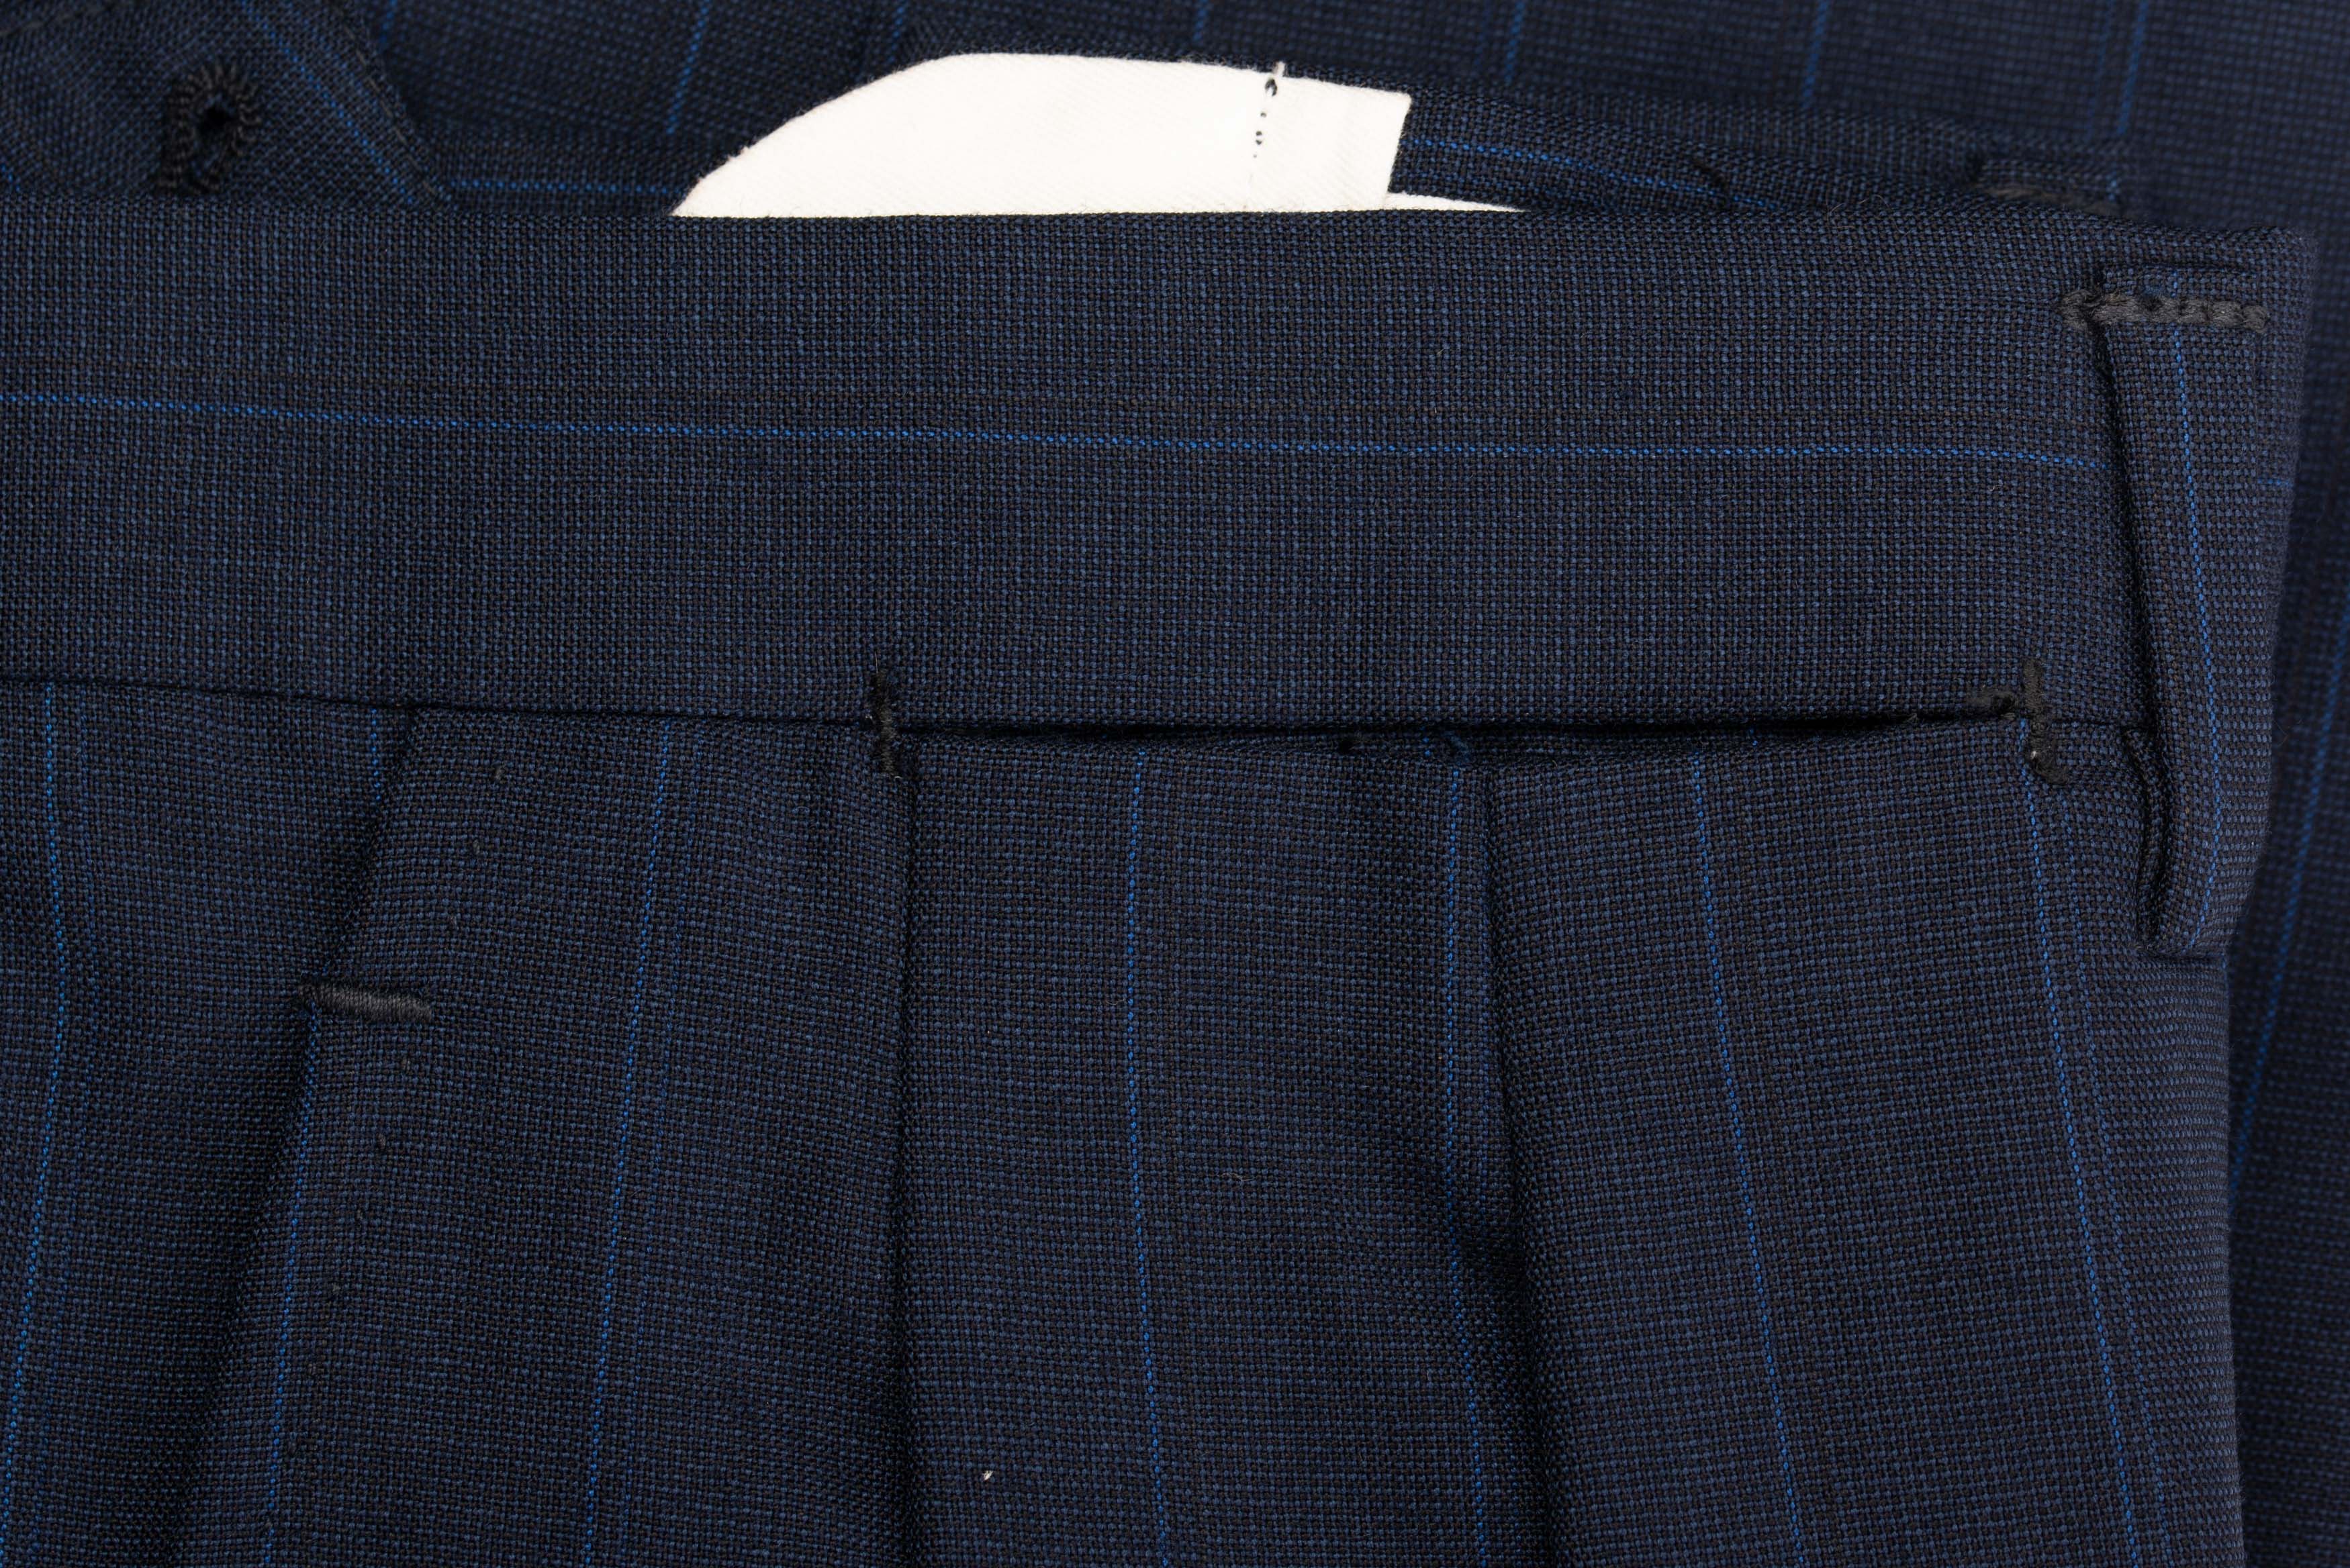 D'AVENZA Roma Blue Striped Wool DP Dress Pants EU 52 NEW US 36 Portly Fit D'AVENZA